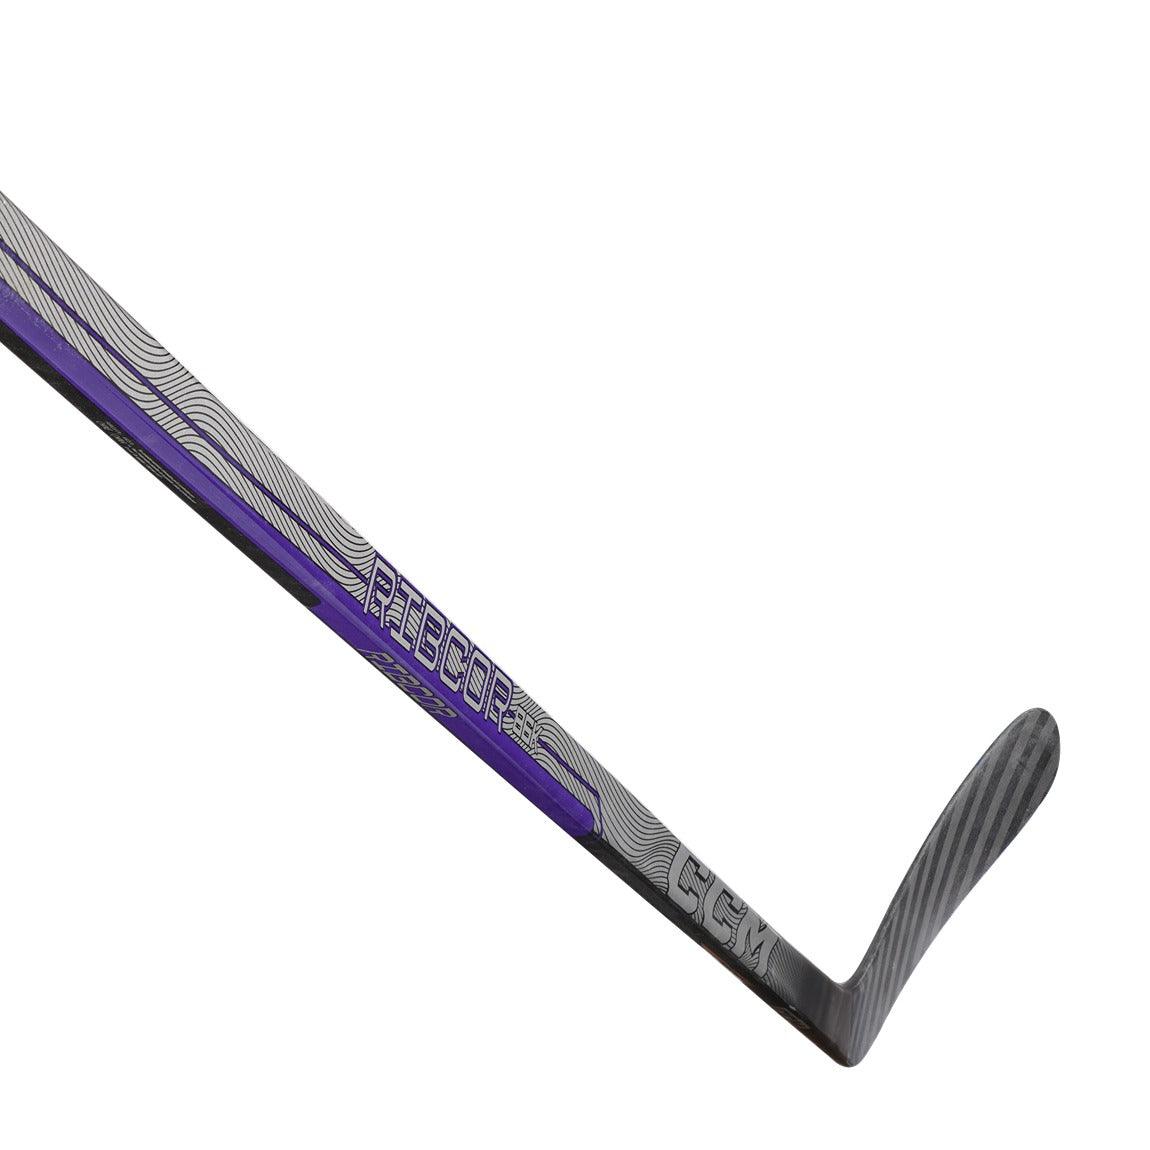 Ribcor 86K Hockey Stick - Senior - Sports Excellence